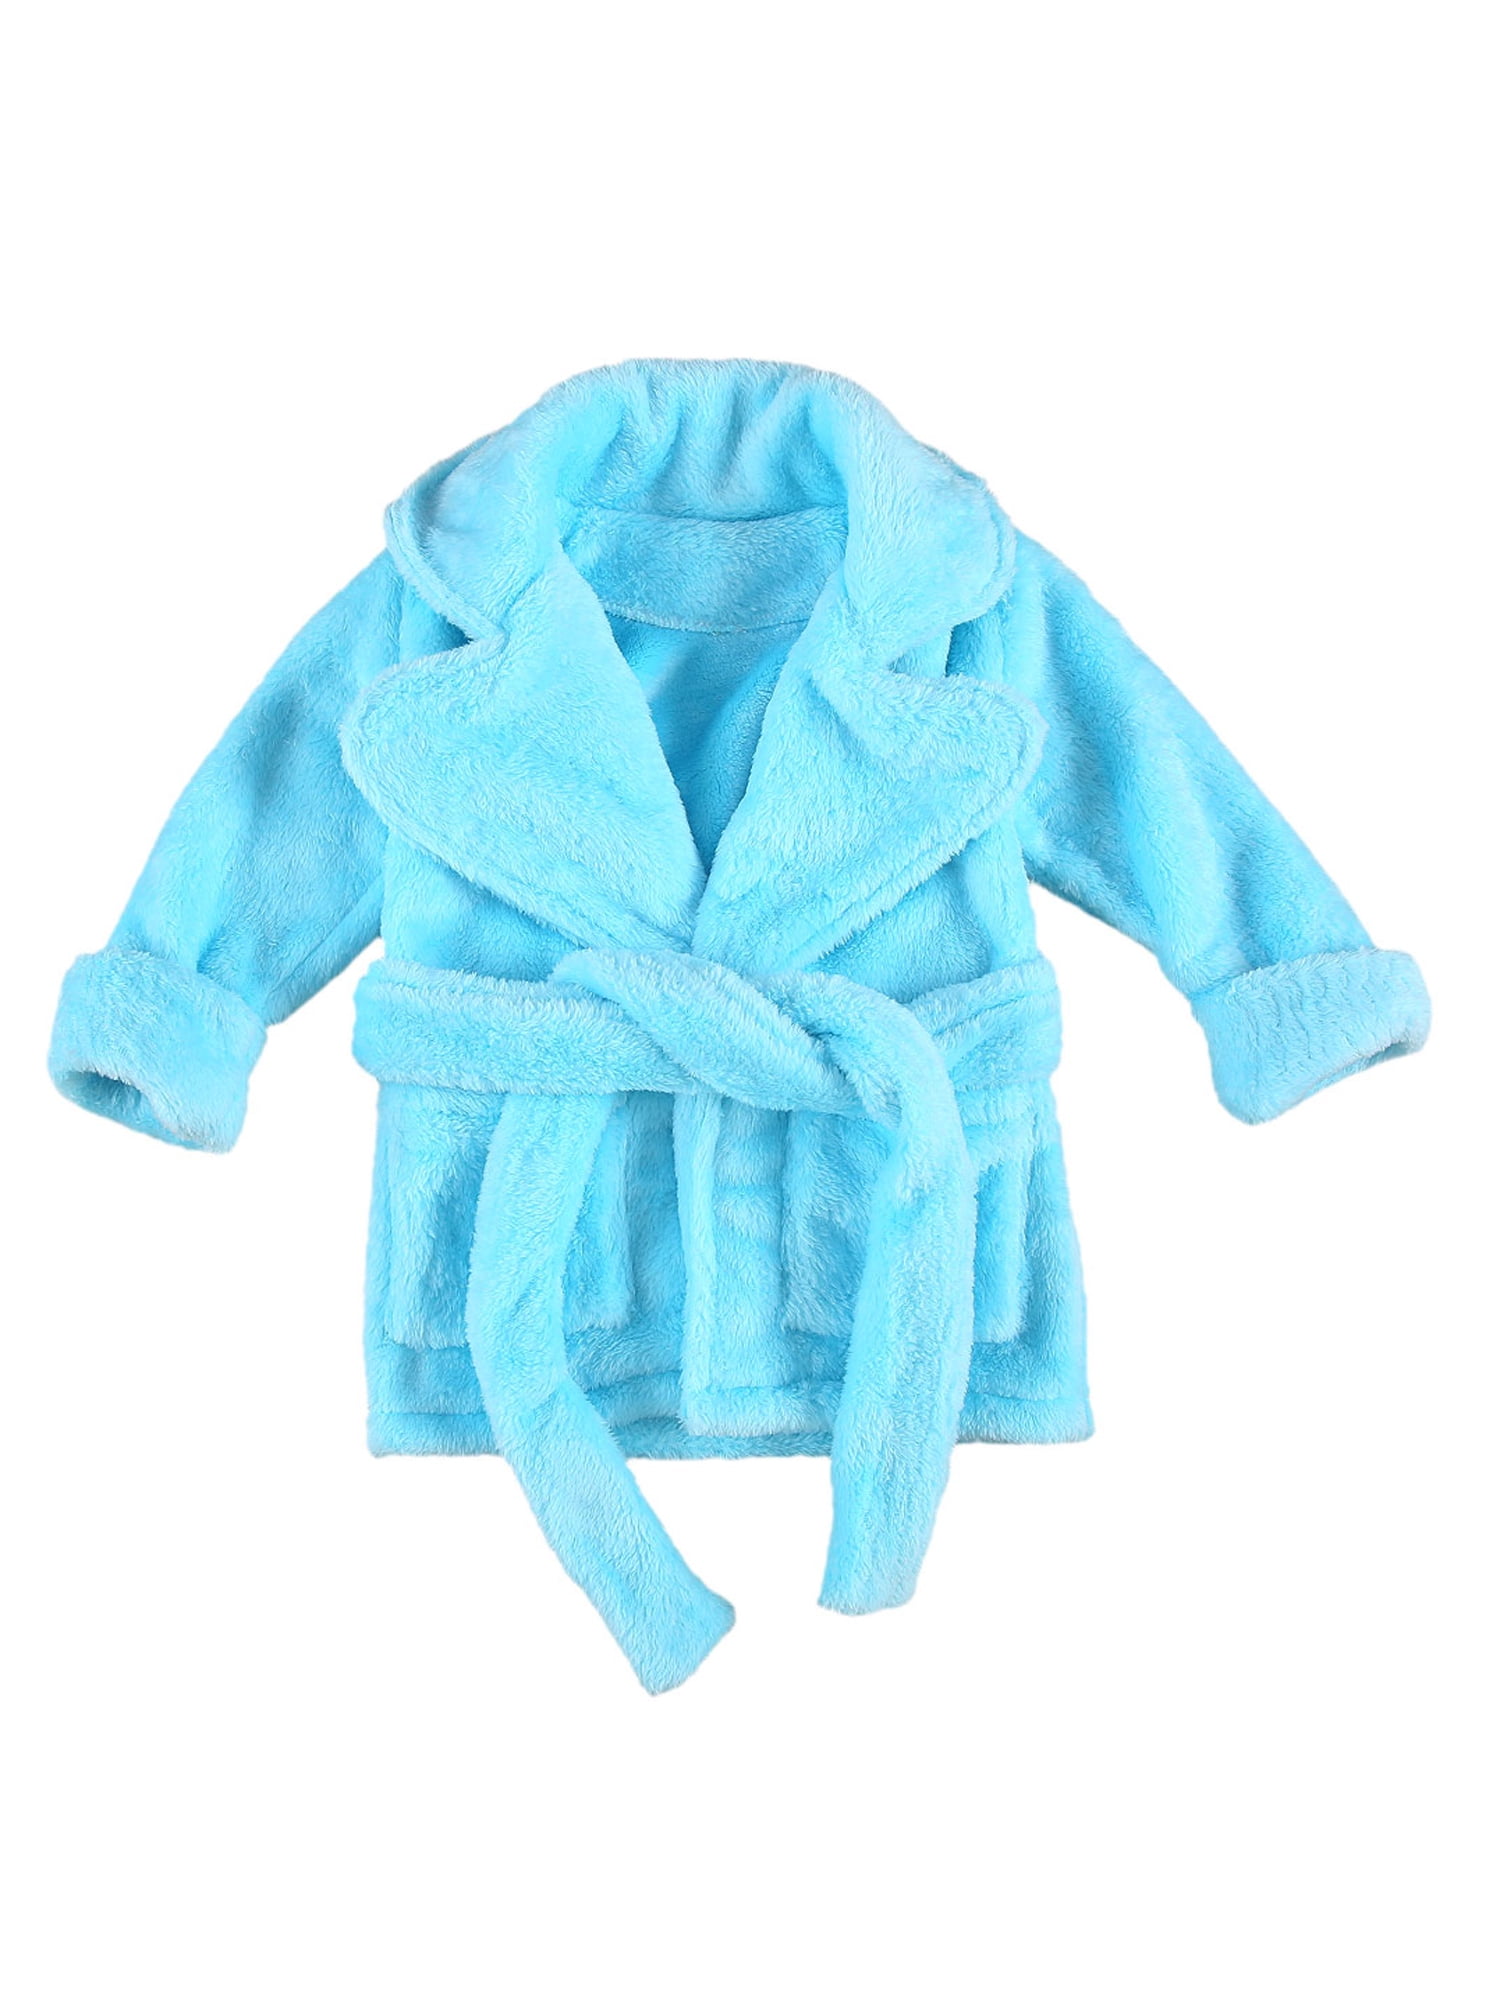 2DXuixsh Infant Toddler Baby Girl Flannel Soft Bathrobes Kimono Robe Pajamas Sleepwear Print Nightgowns with Belt 